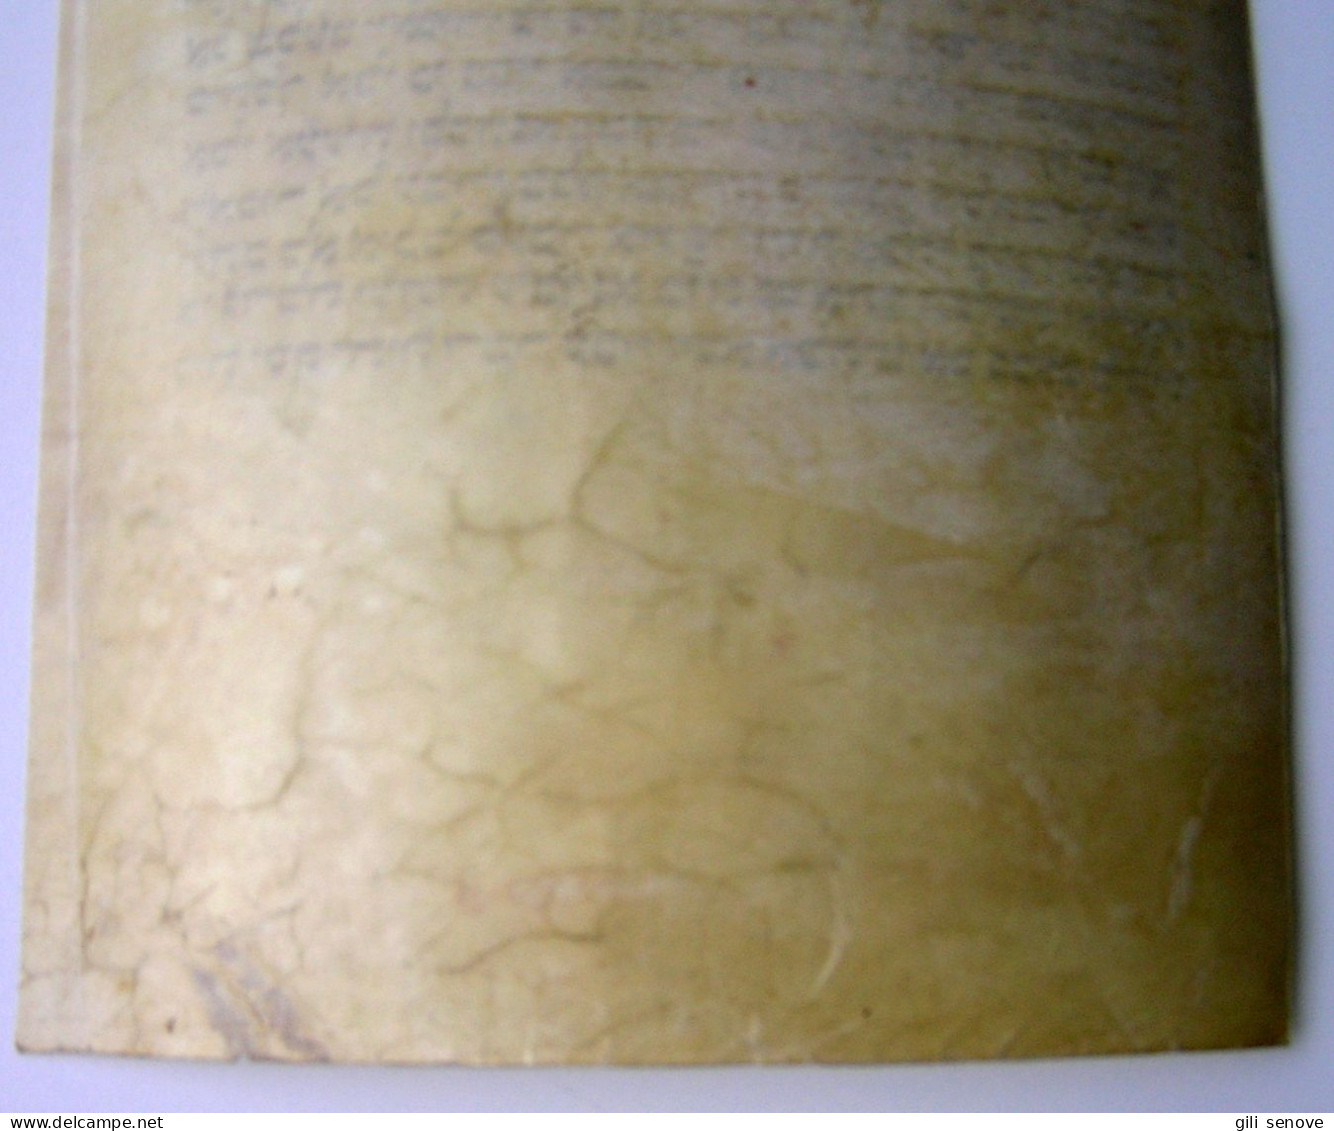 Antique Torah Bible Manuscript Fragment from Europe